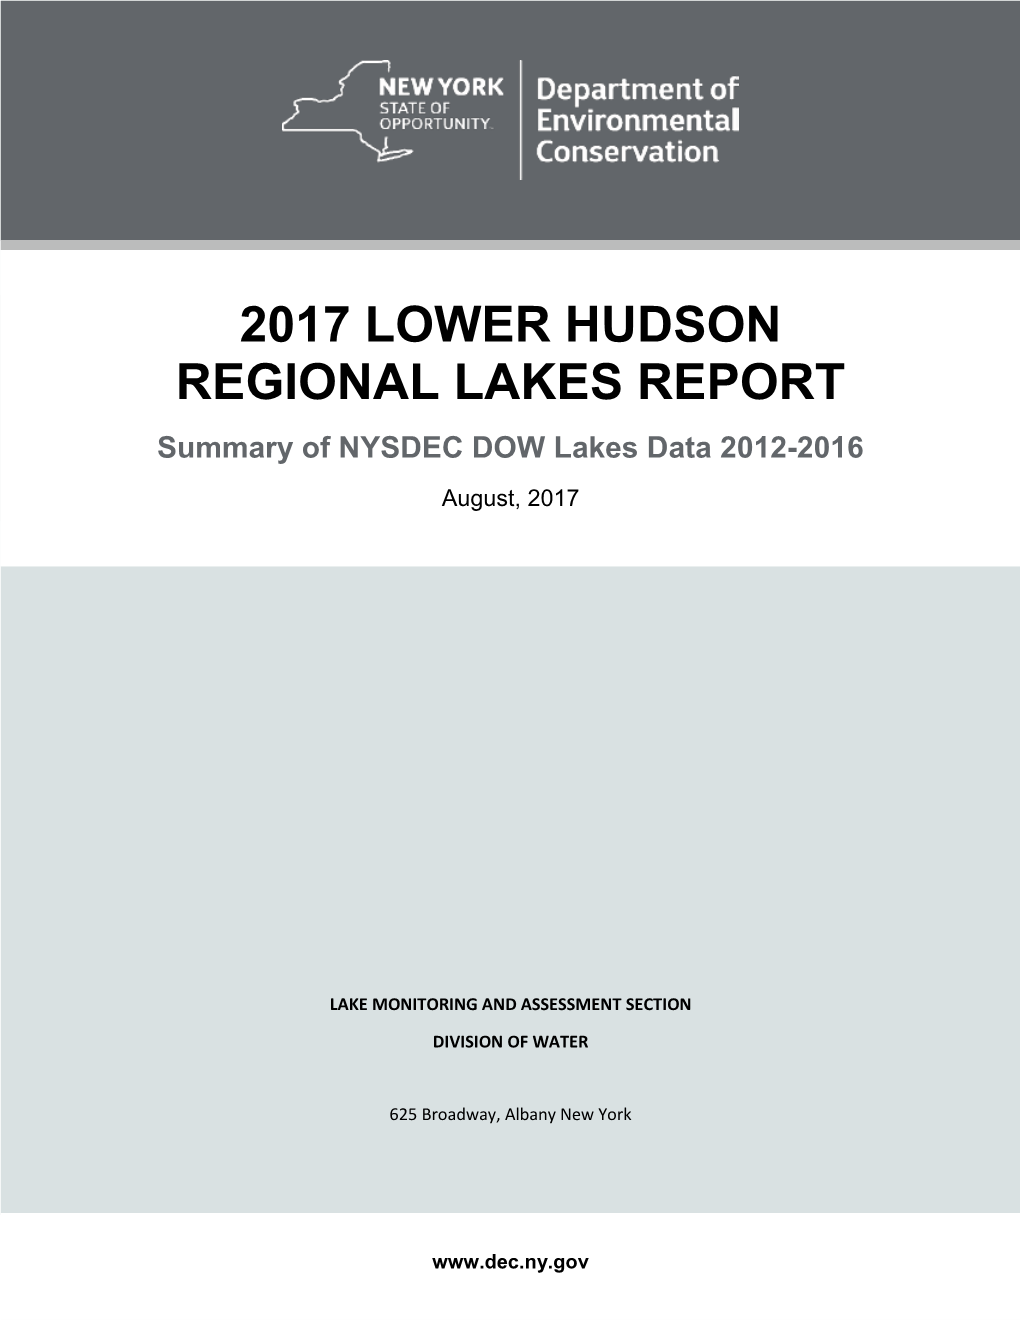 Lower Hudson 2012-2016 Regional Lakes Report